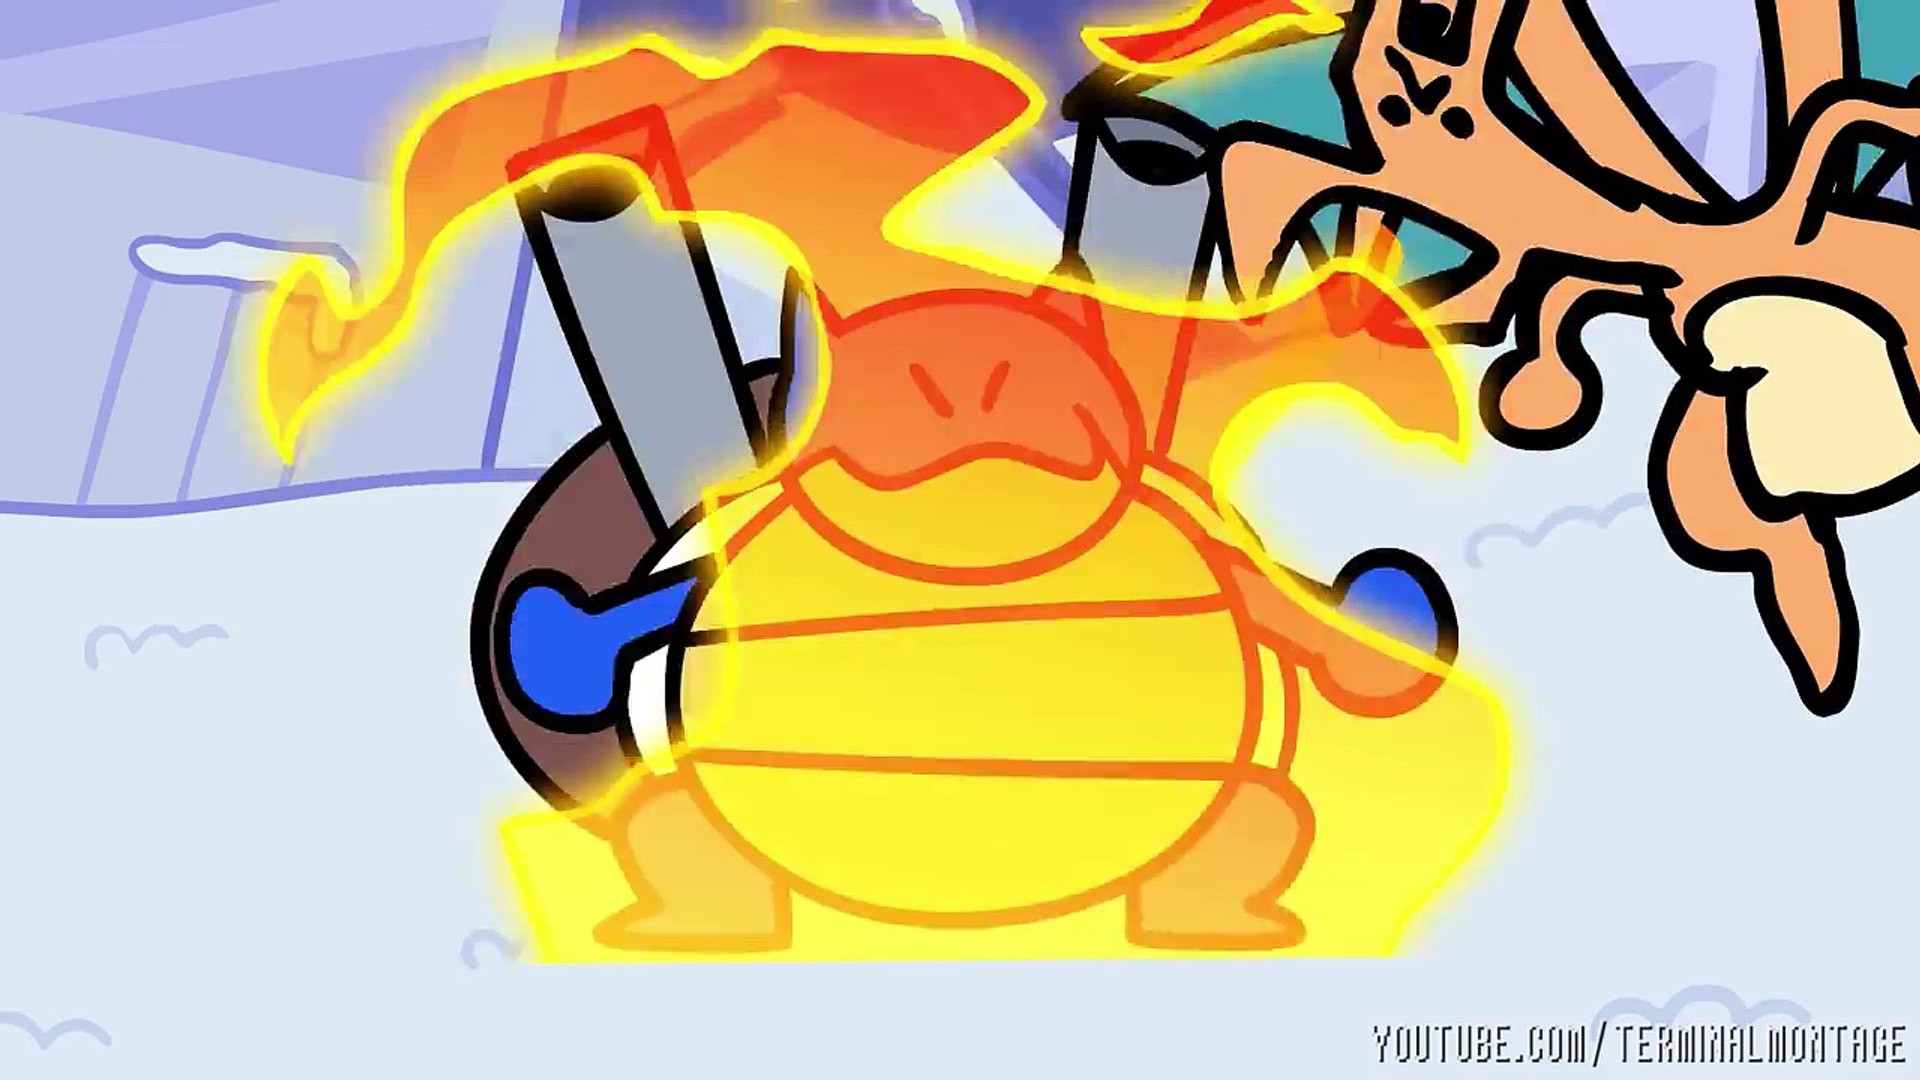 Mega Pokemon Battle Royale (Loud Sound_Flashing Lights Warning) ☄️ Col